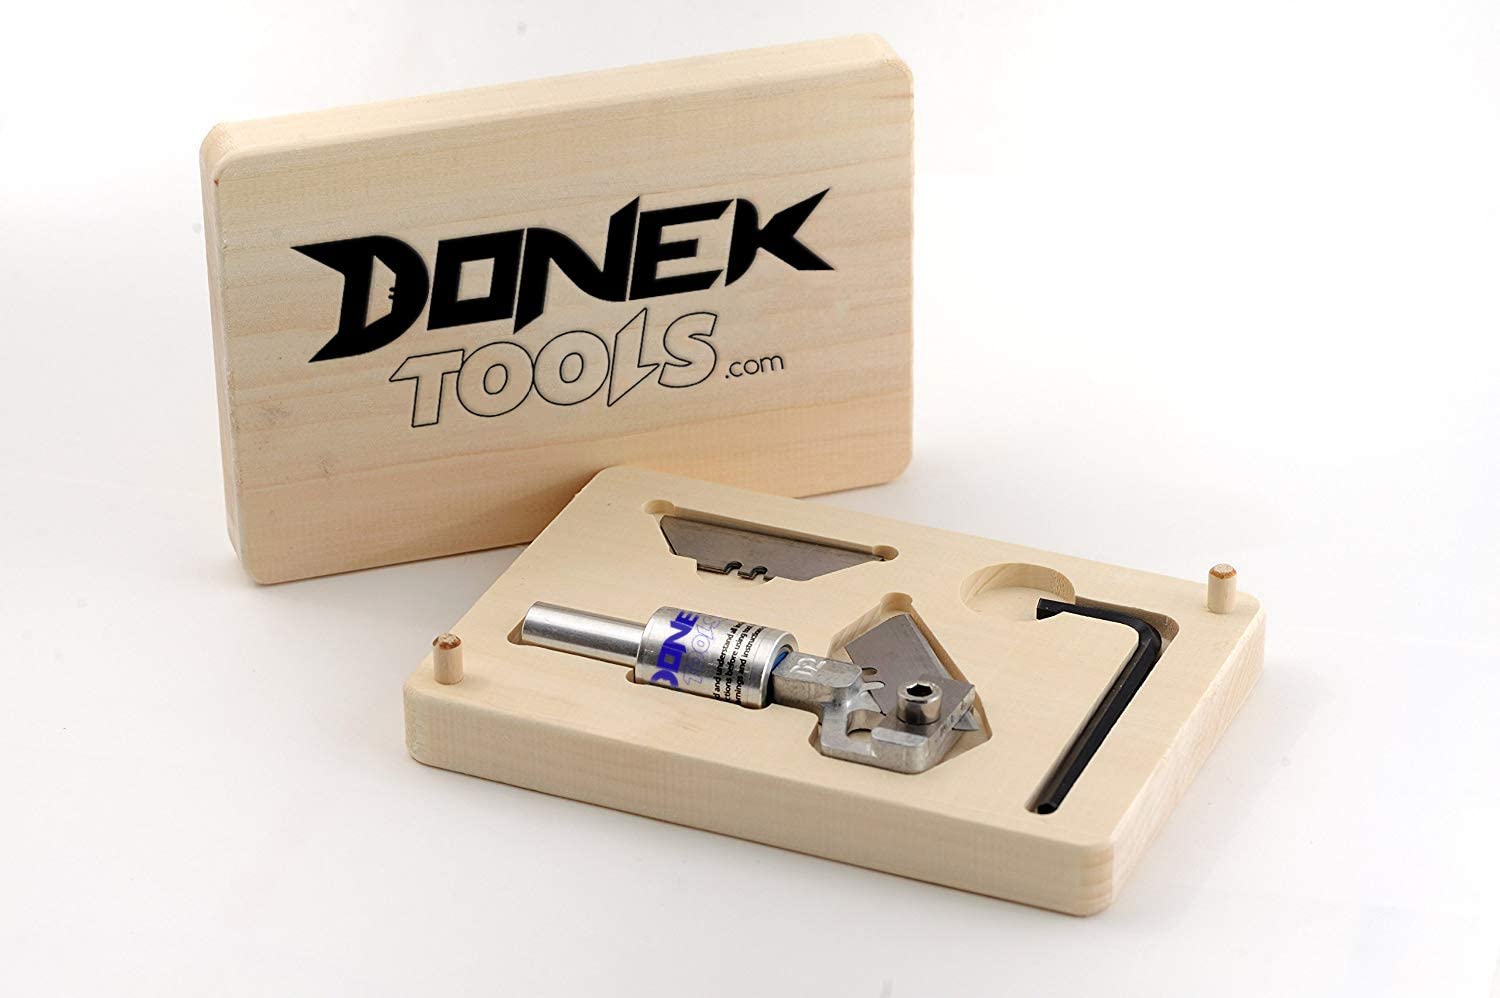 Donek Tools D2 Drag Knife